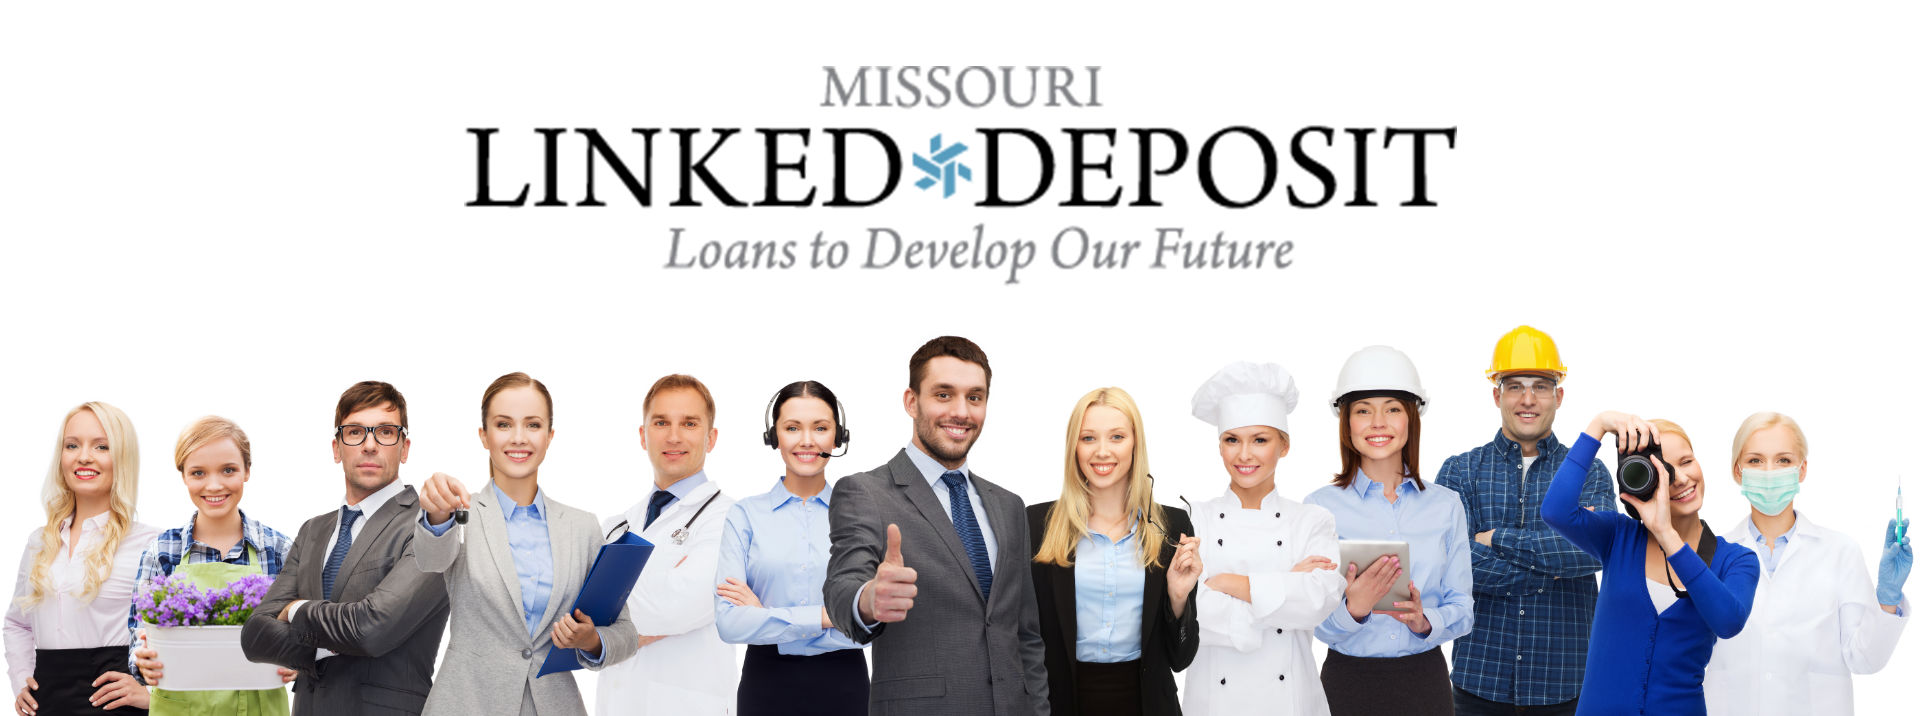 Group of people together promoting Missouri Linked Deposit